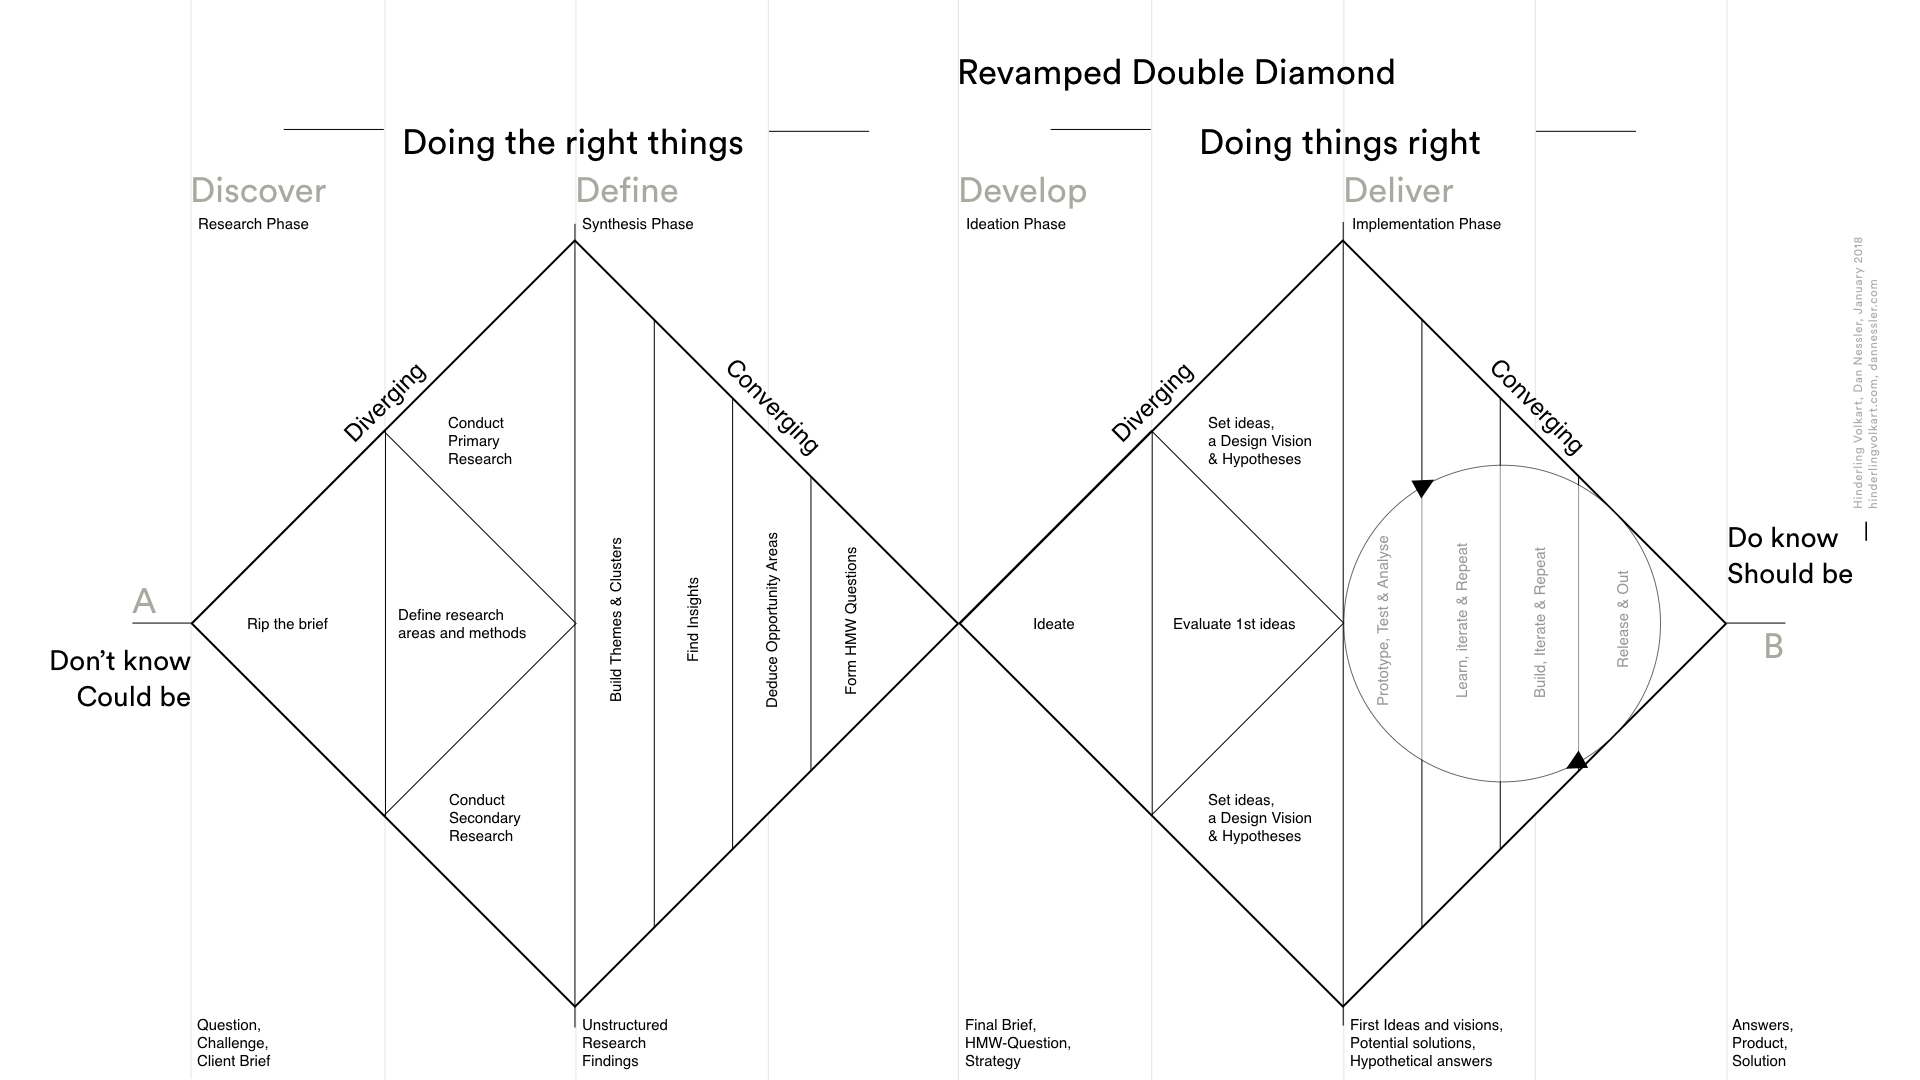 Revamped Double Diamond by Dan Nessler